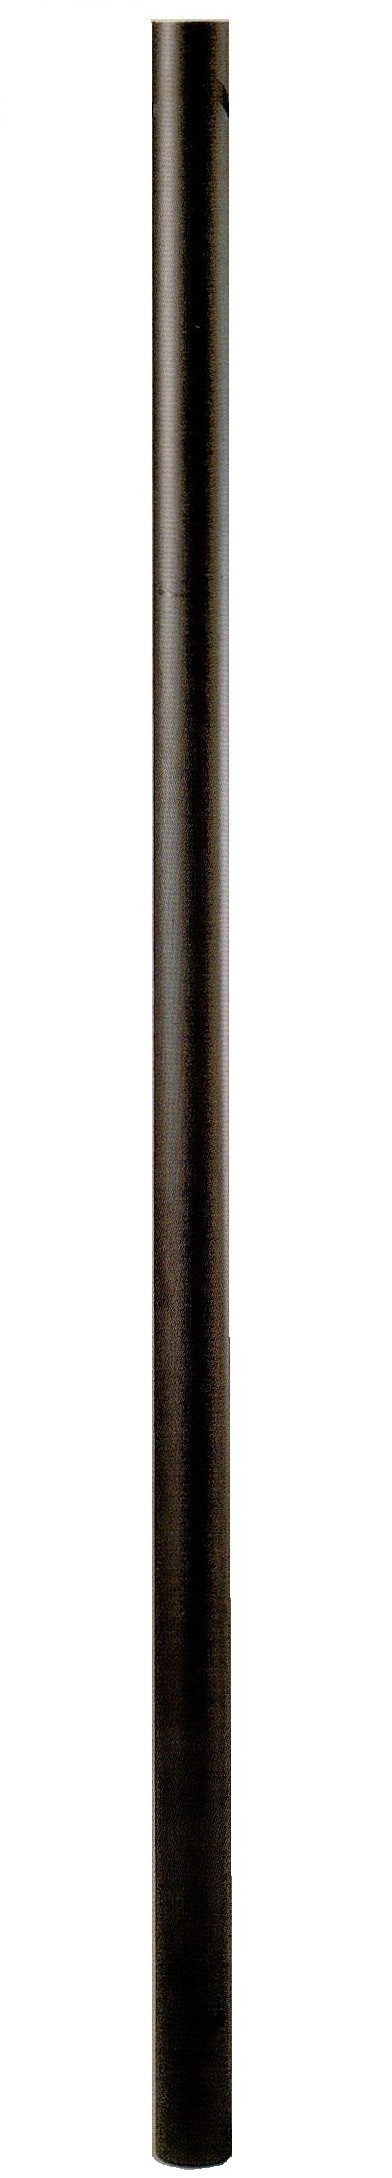 ZBP 12 foot 3" Diameter Cast Aluminum Direct Burial Pole 